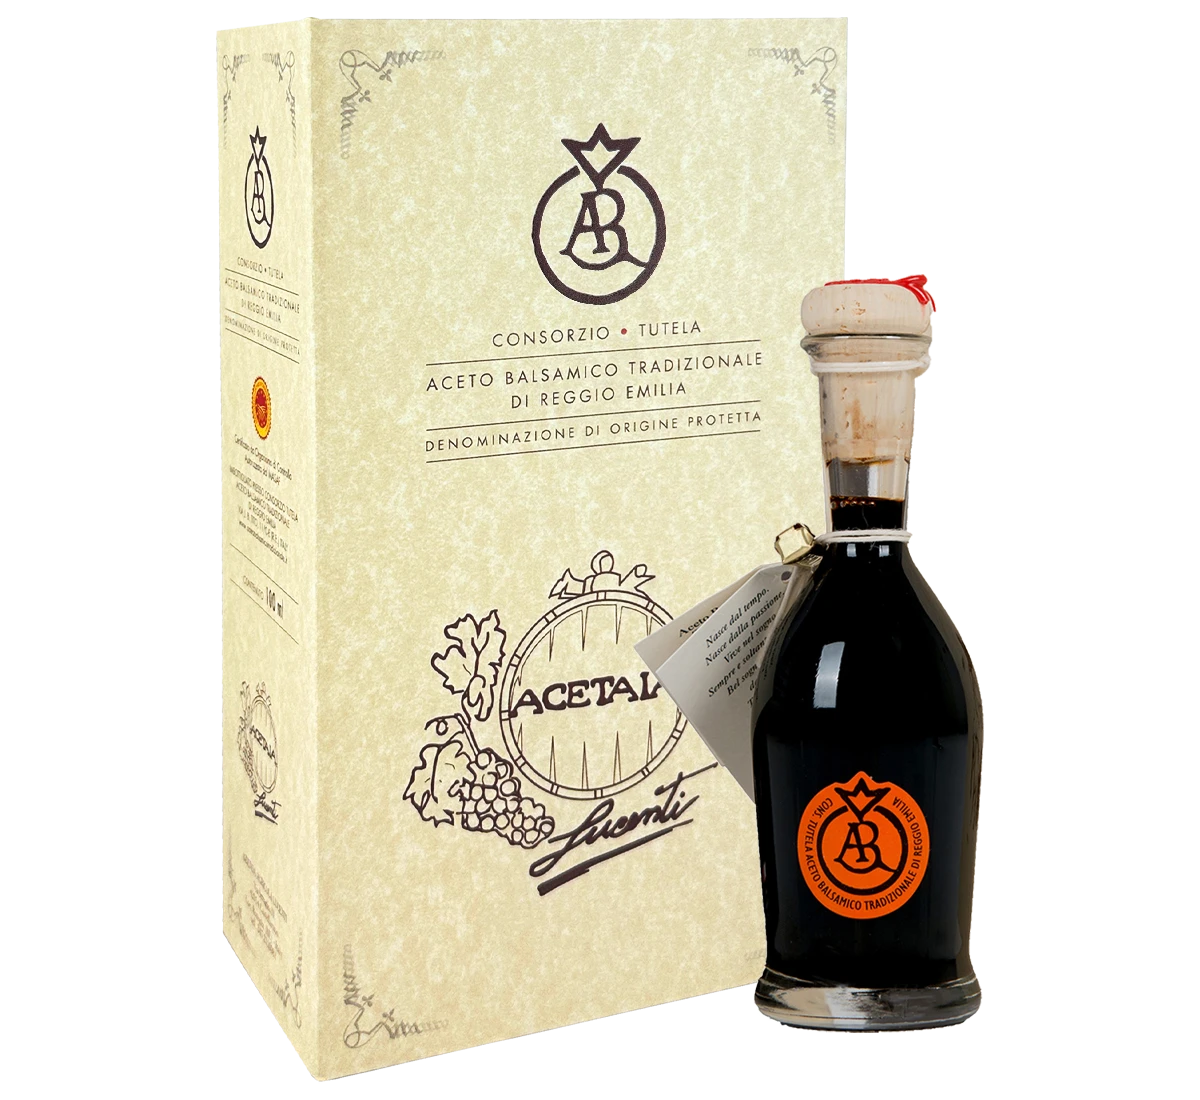 Traditional Balsamic Vinegar of Reggio Emilia PDO - Aragosta - Over 12 Years (100 ml. / 3.38 fl. oz.)